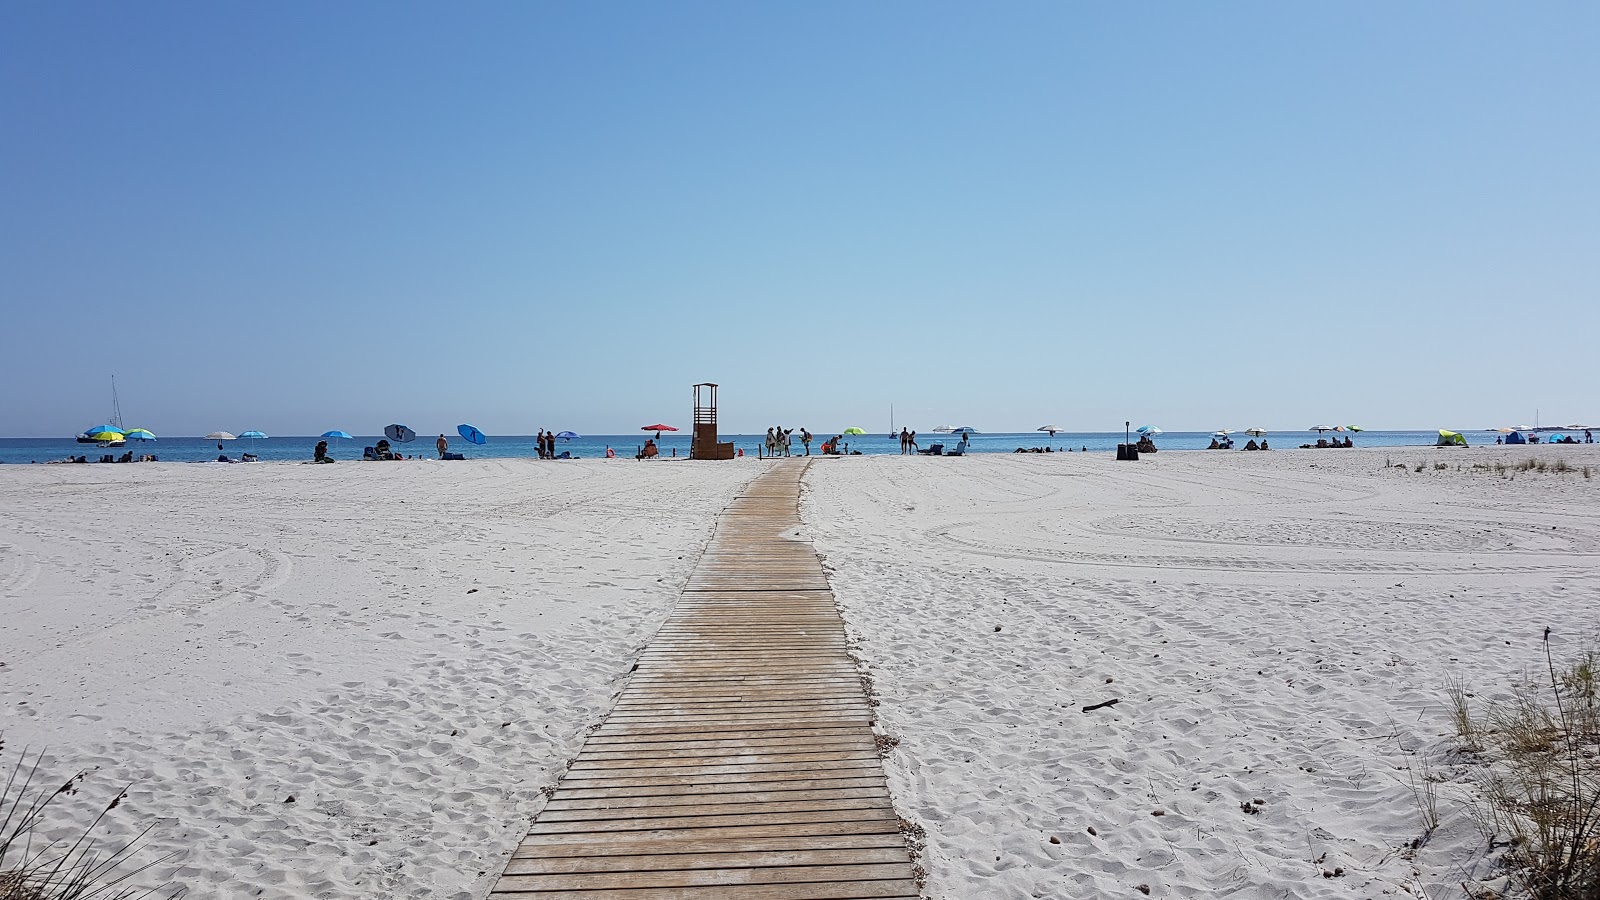 Valokuva Spiaggia Di Capo Cominoista. ja asutus